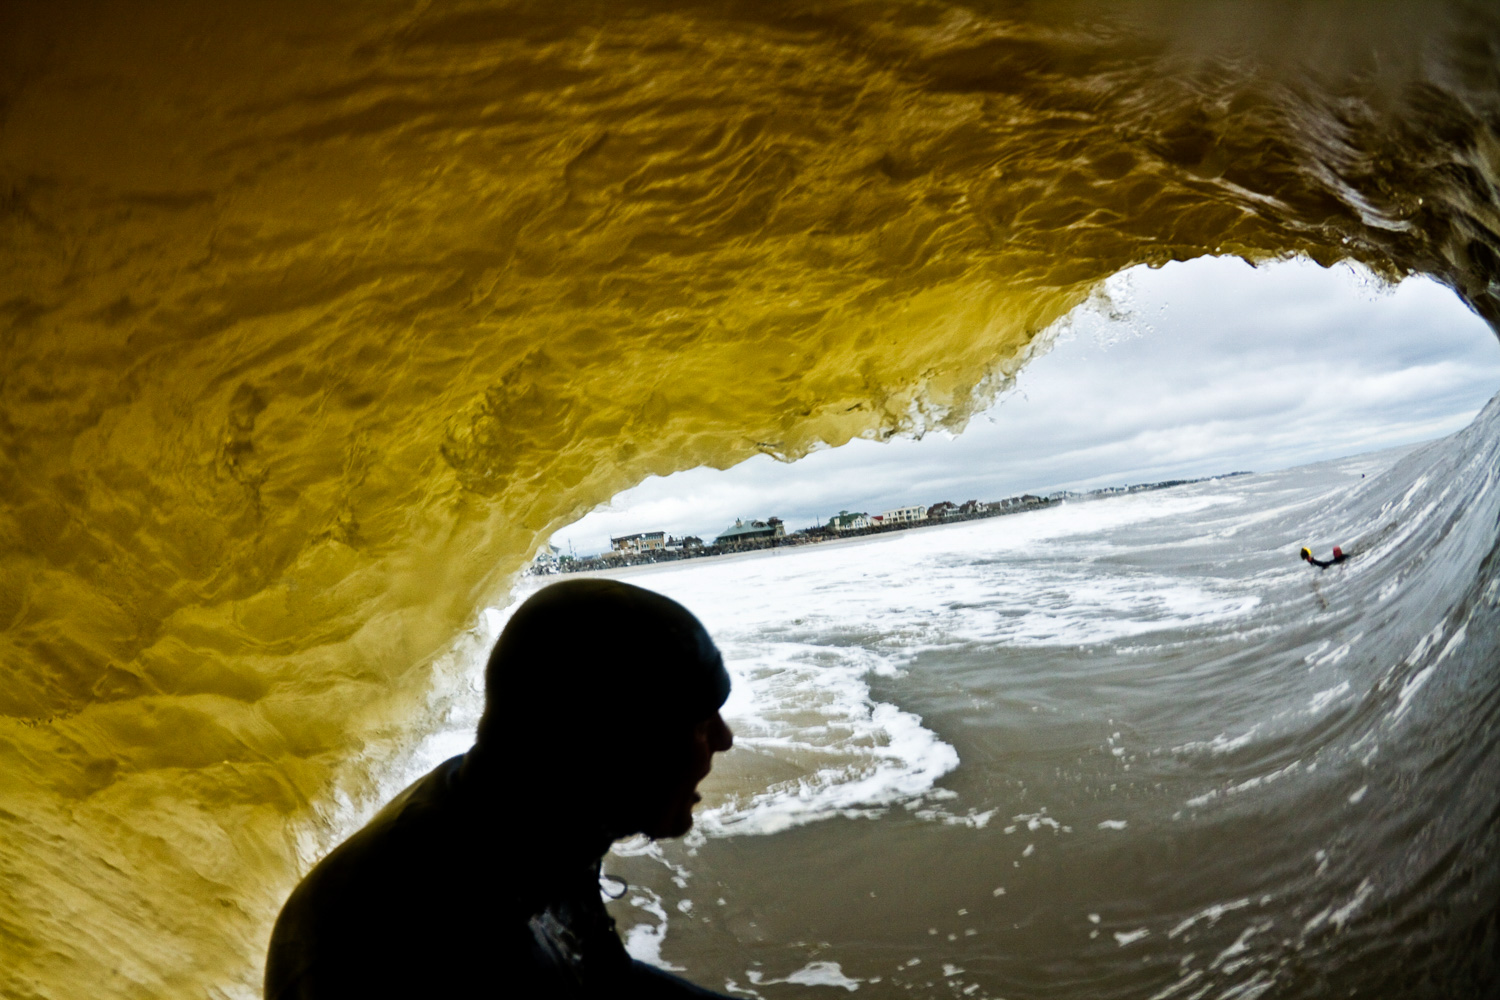 Surf Photo